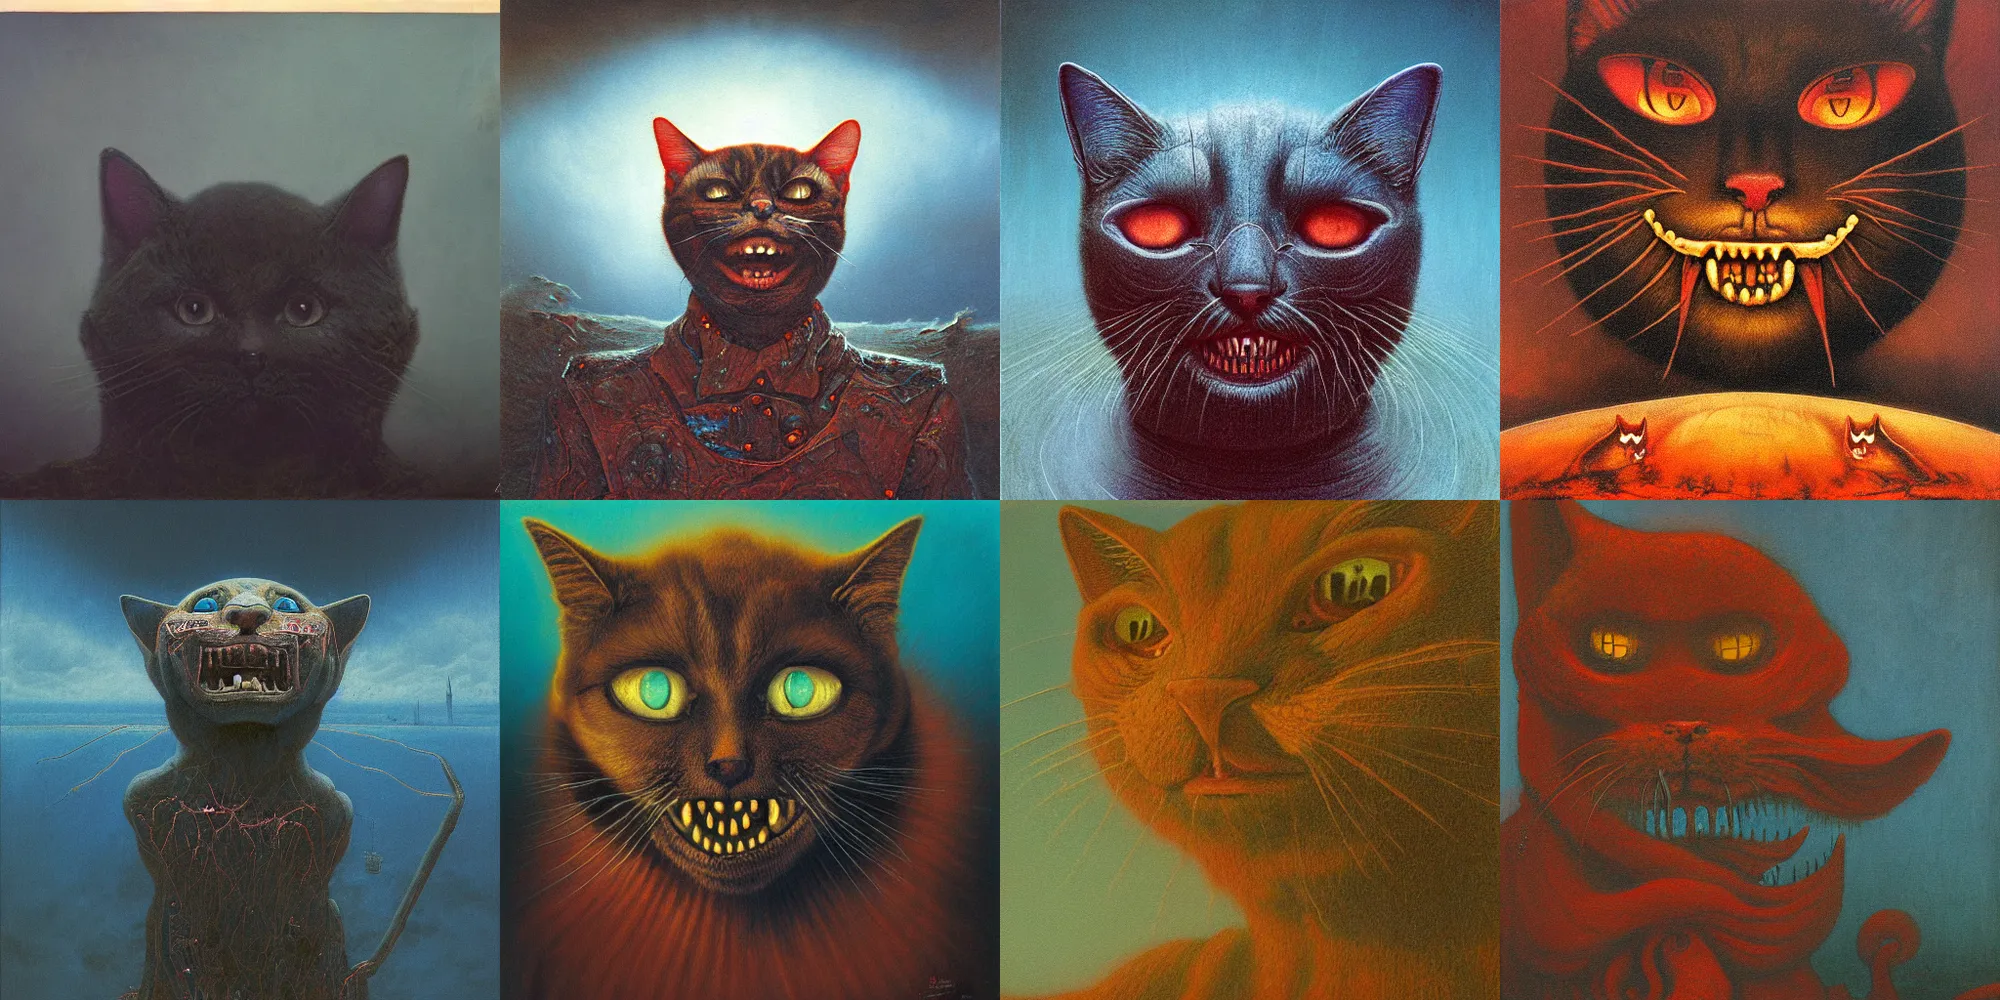 Prompt: grinning evil cat, HD, award winning, in style of beksinski, film grain, medium format, 8k resolution, oil on canvas